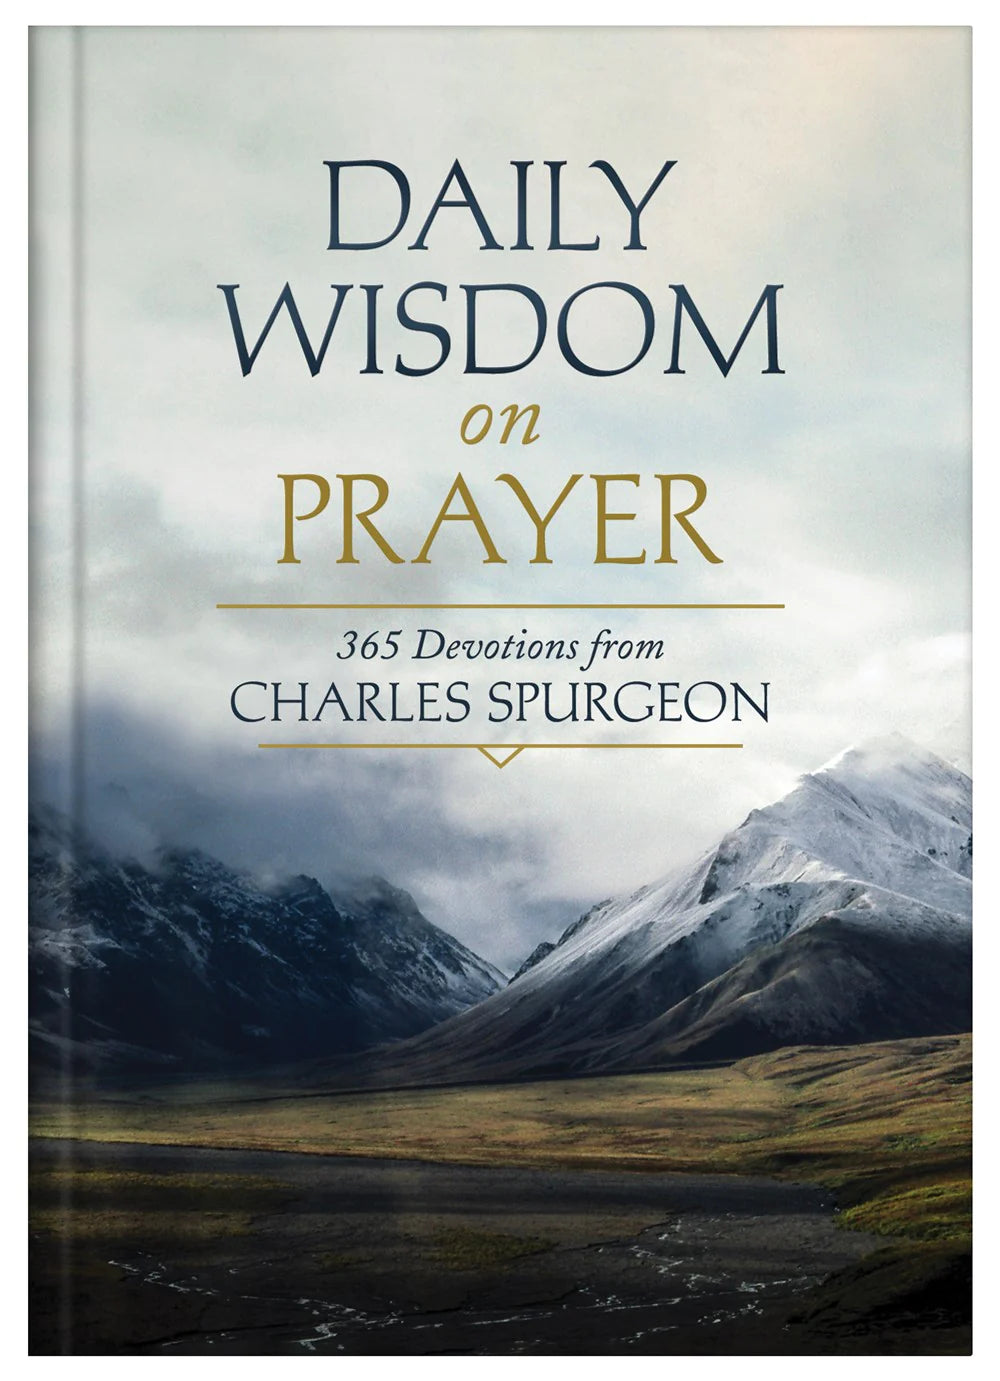 Daily Wisdom on Prayer: 365 Devotions from Charles Spurgeon - Devotional Book